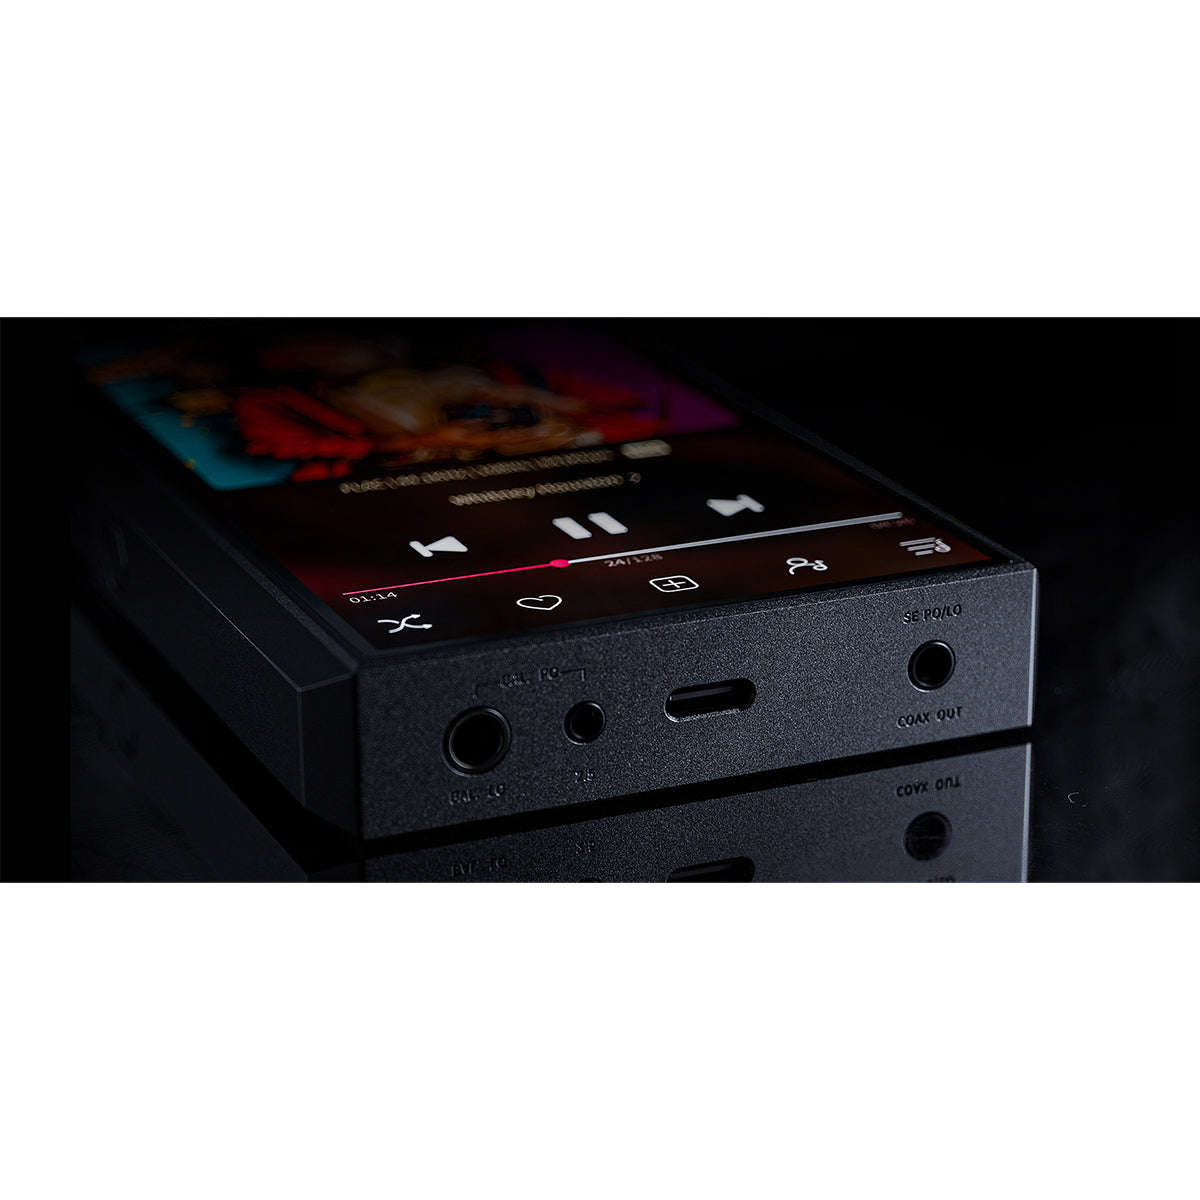 FiiO M11 Plus ESS Portable Music Player